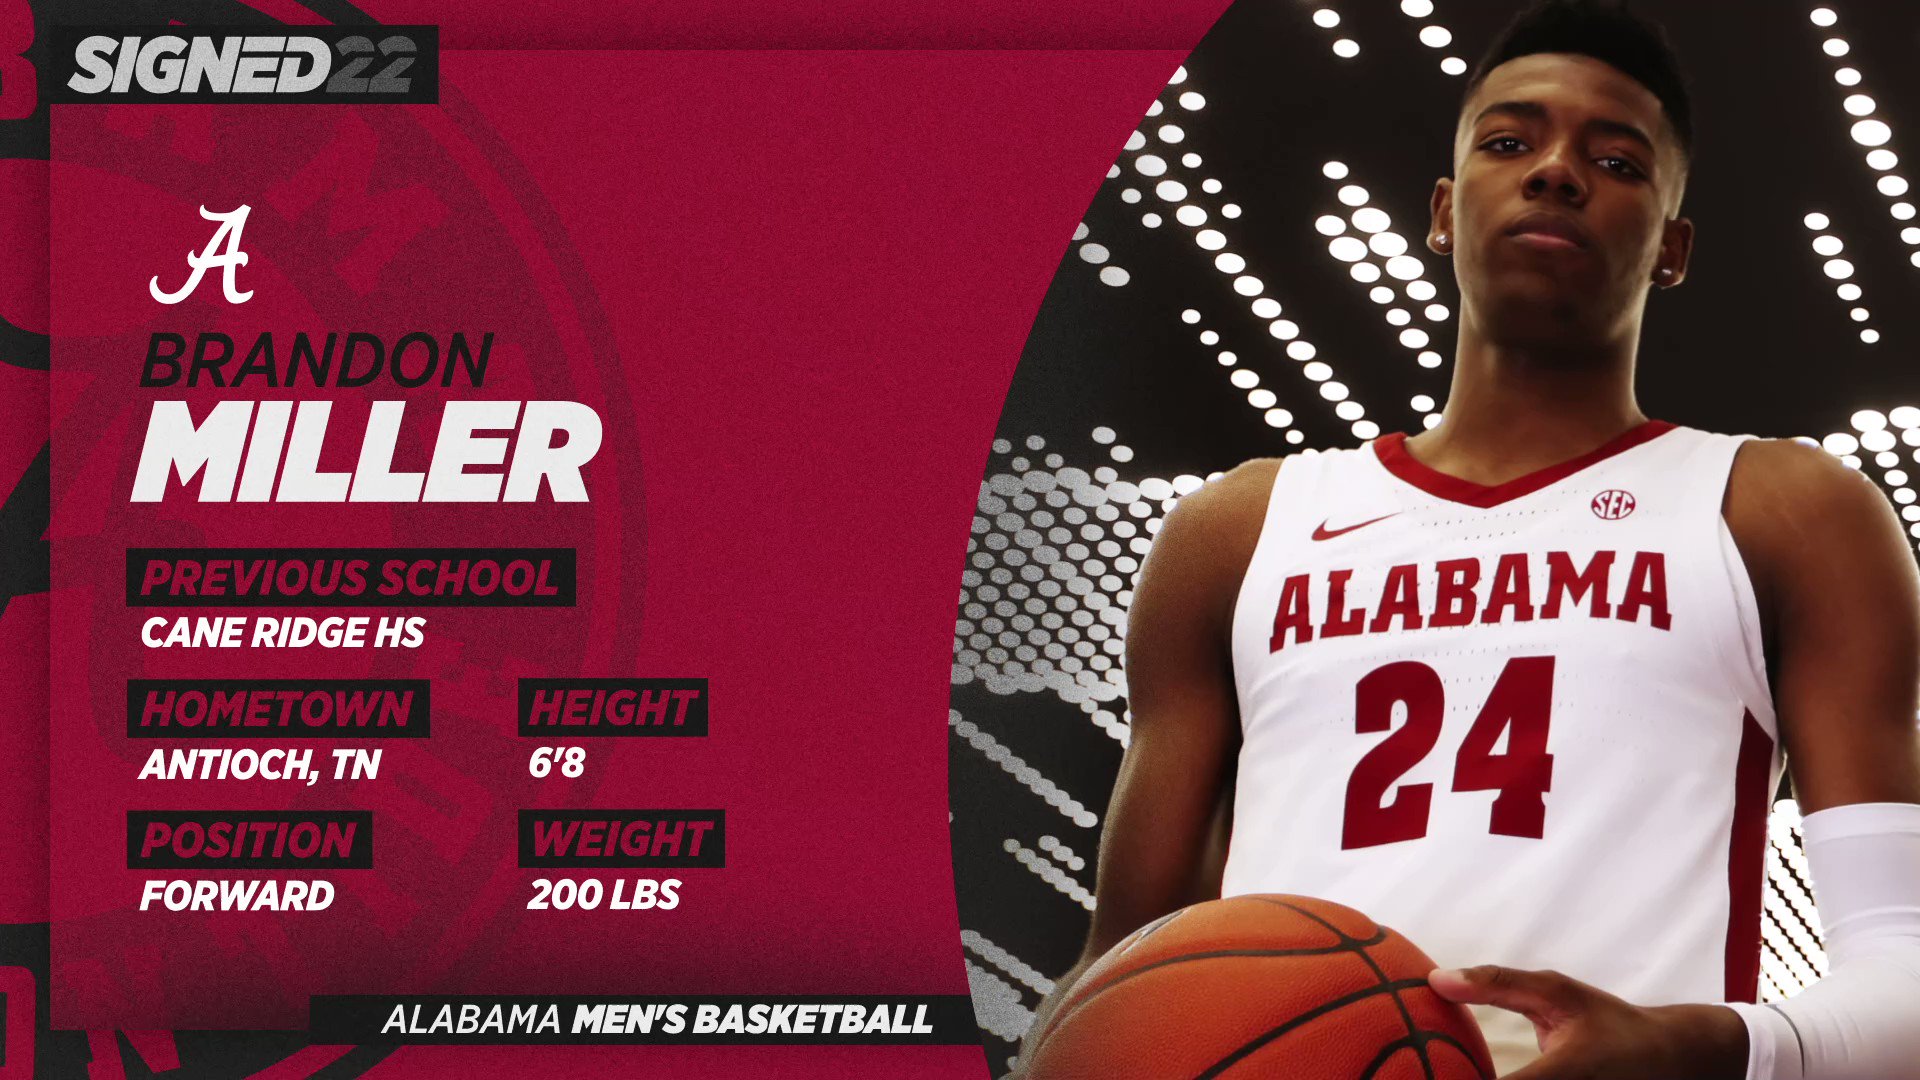 Alabama Men's Basketball on X: It's official‼️ Brandon Miller